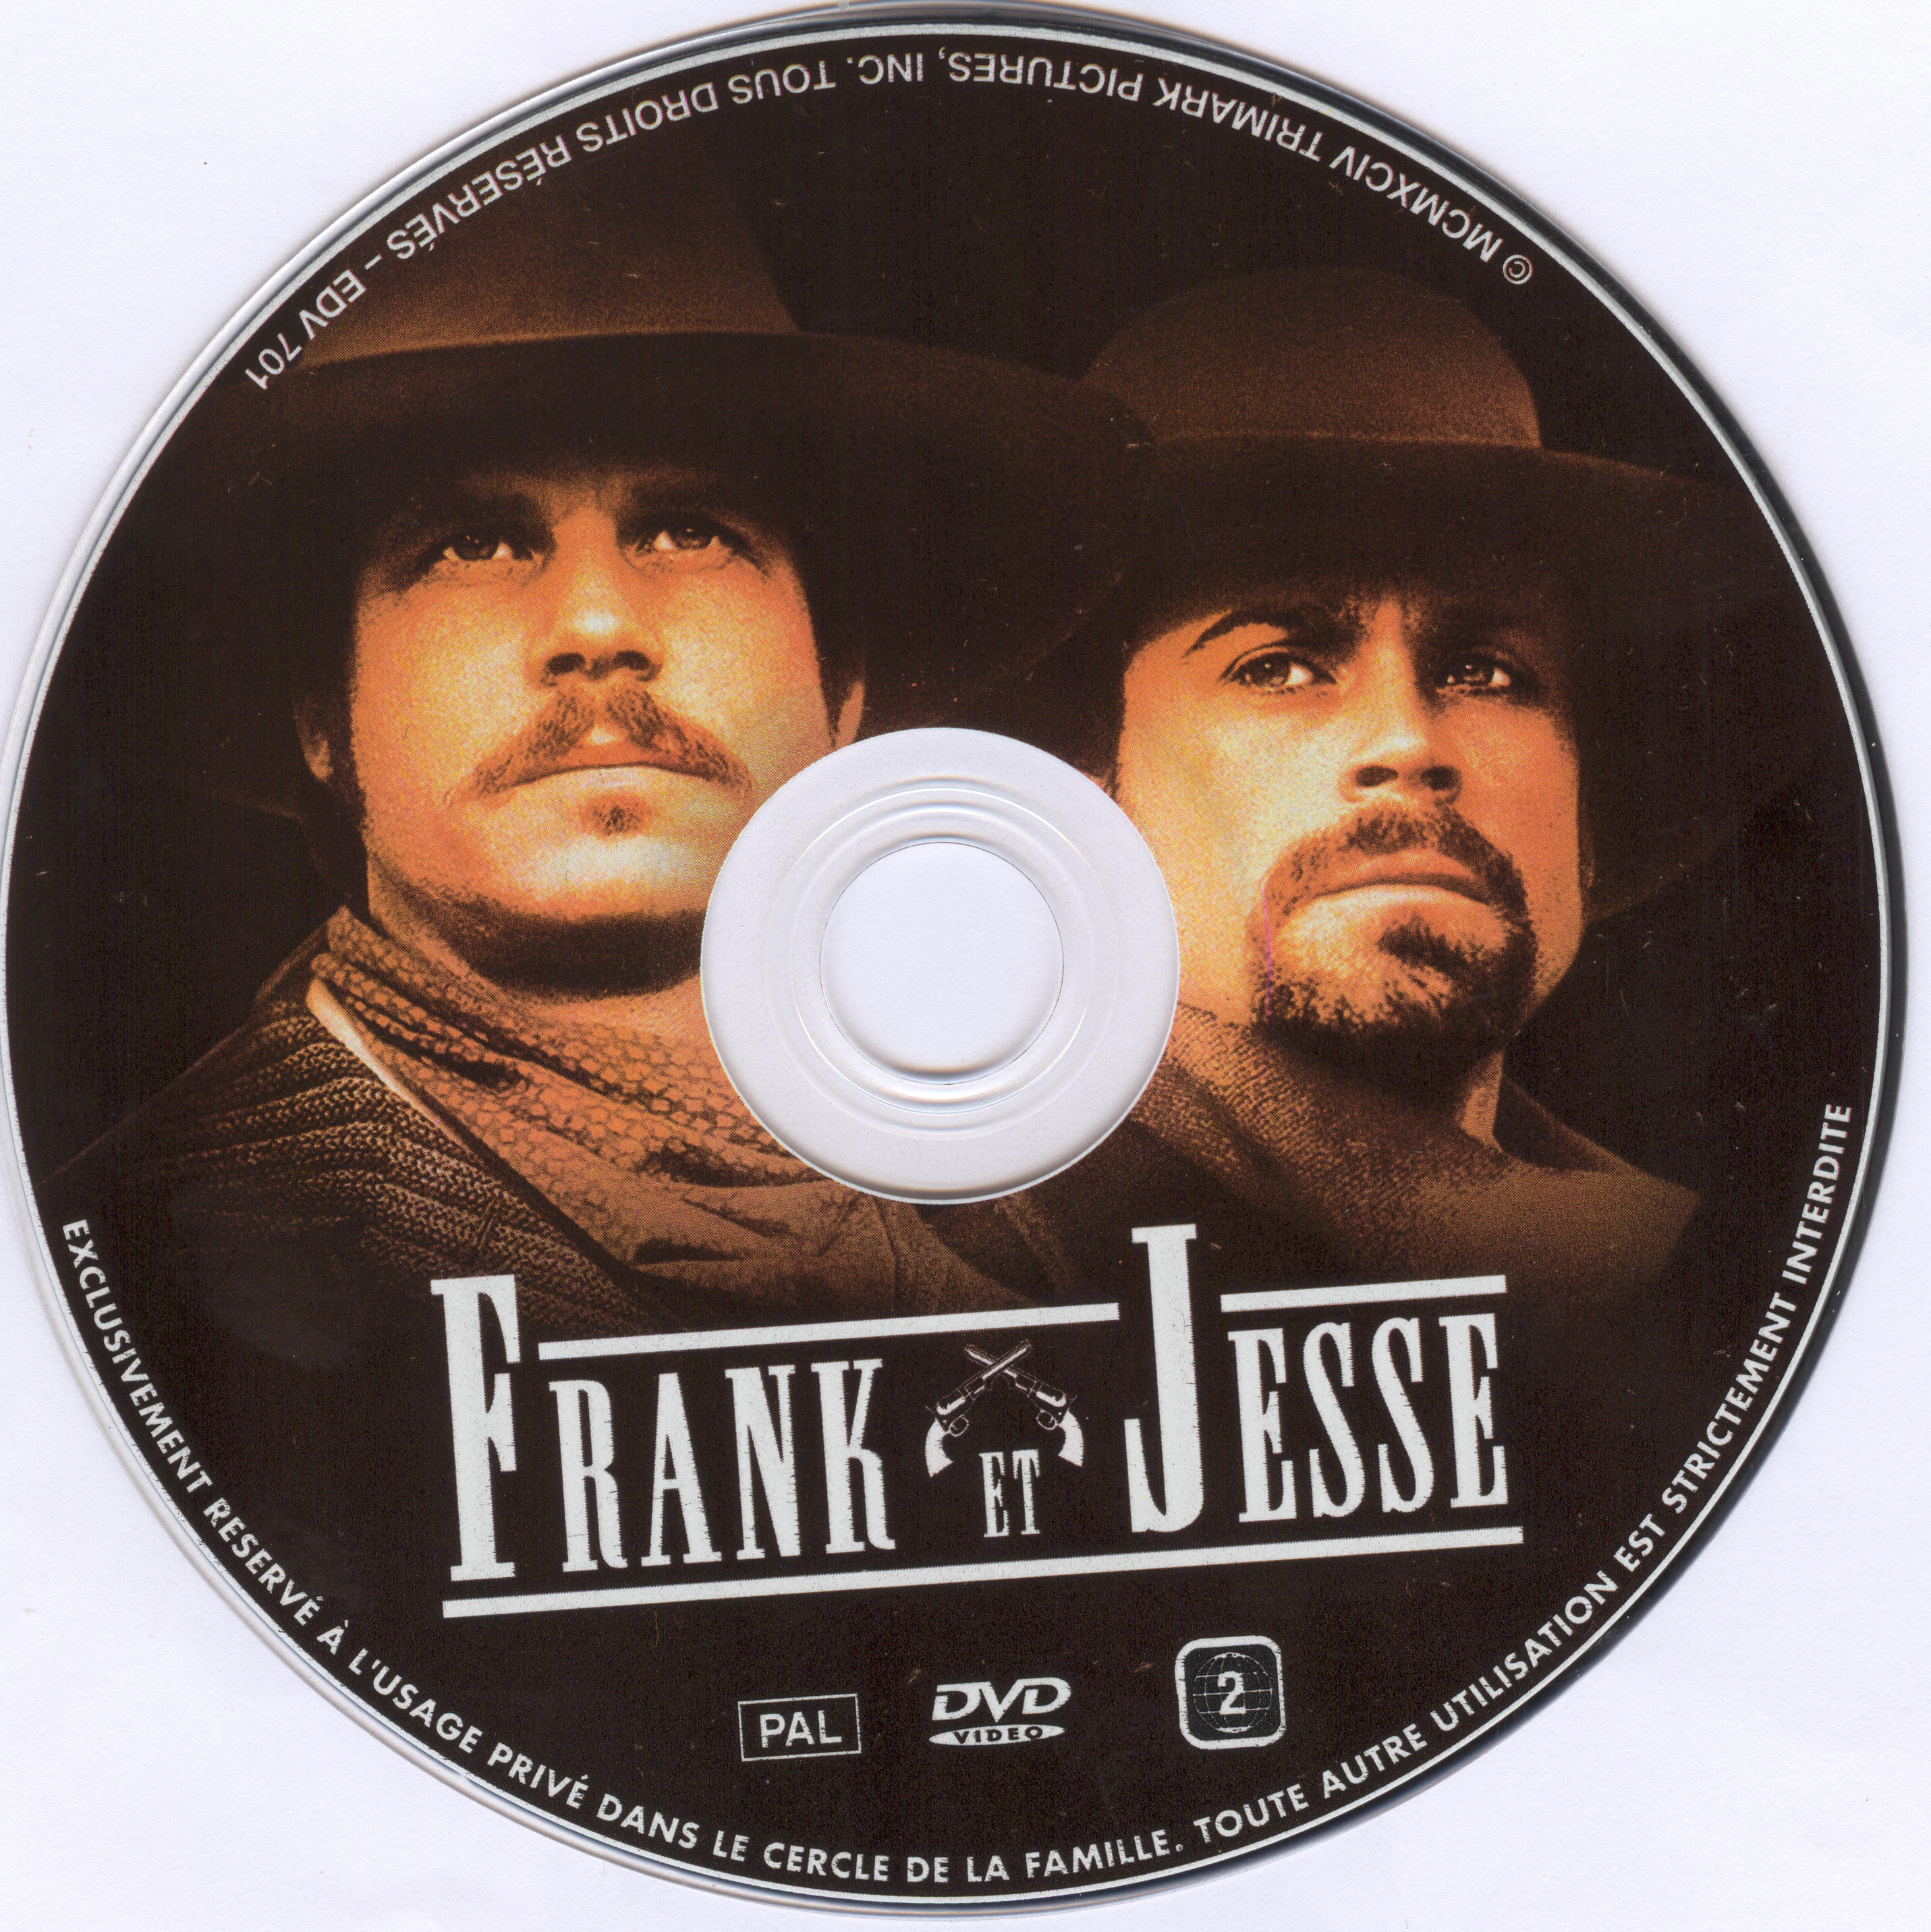 Frank et Jesse